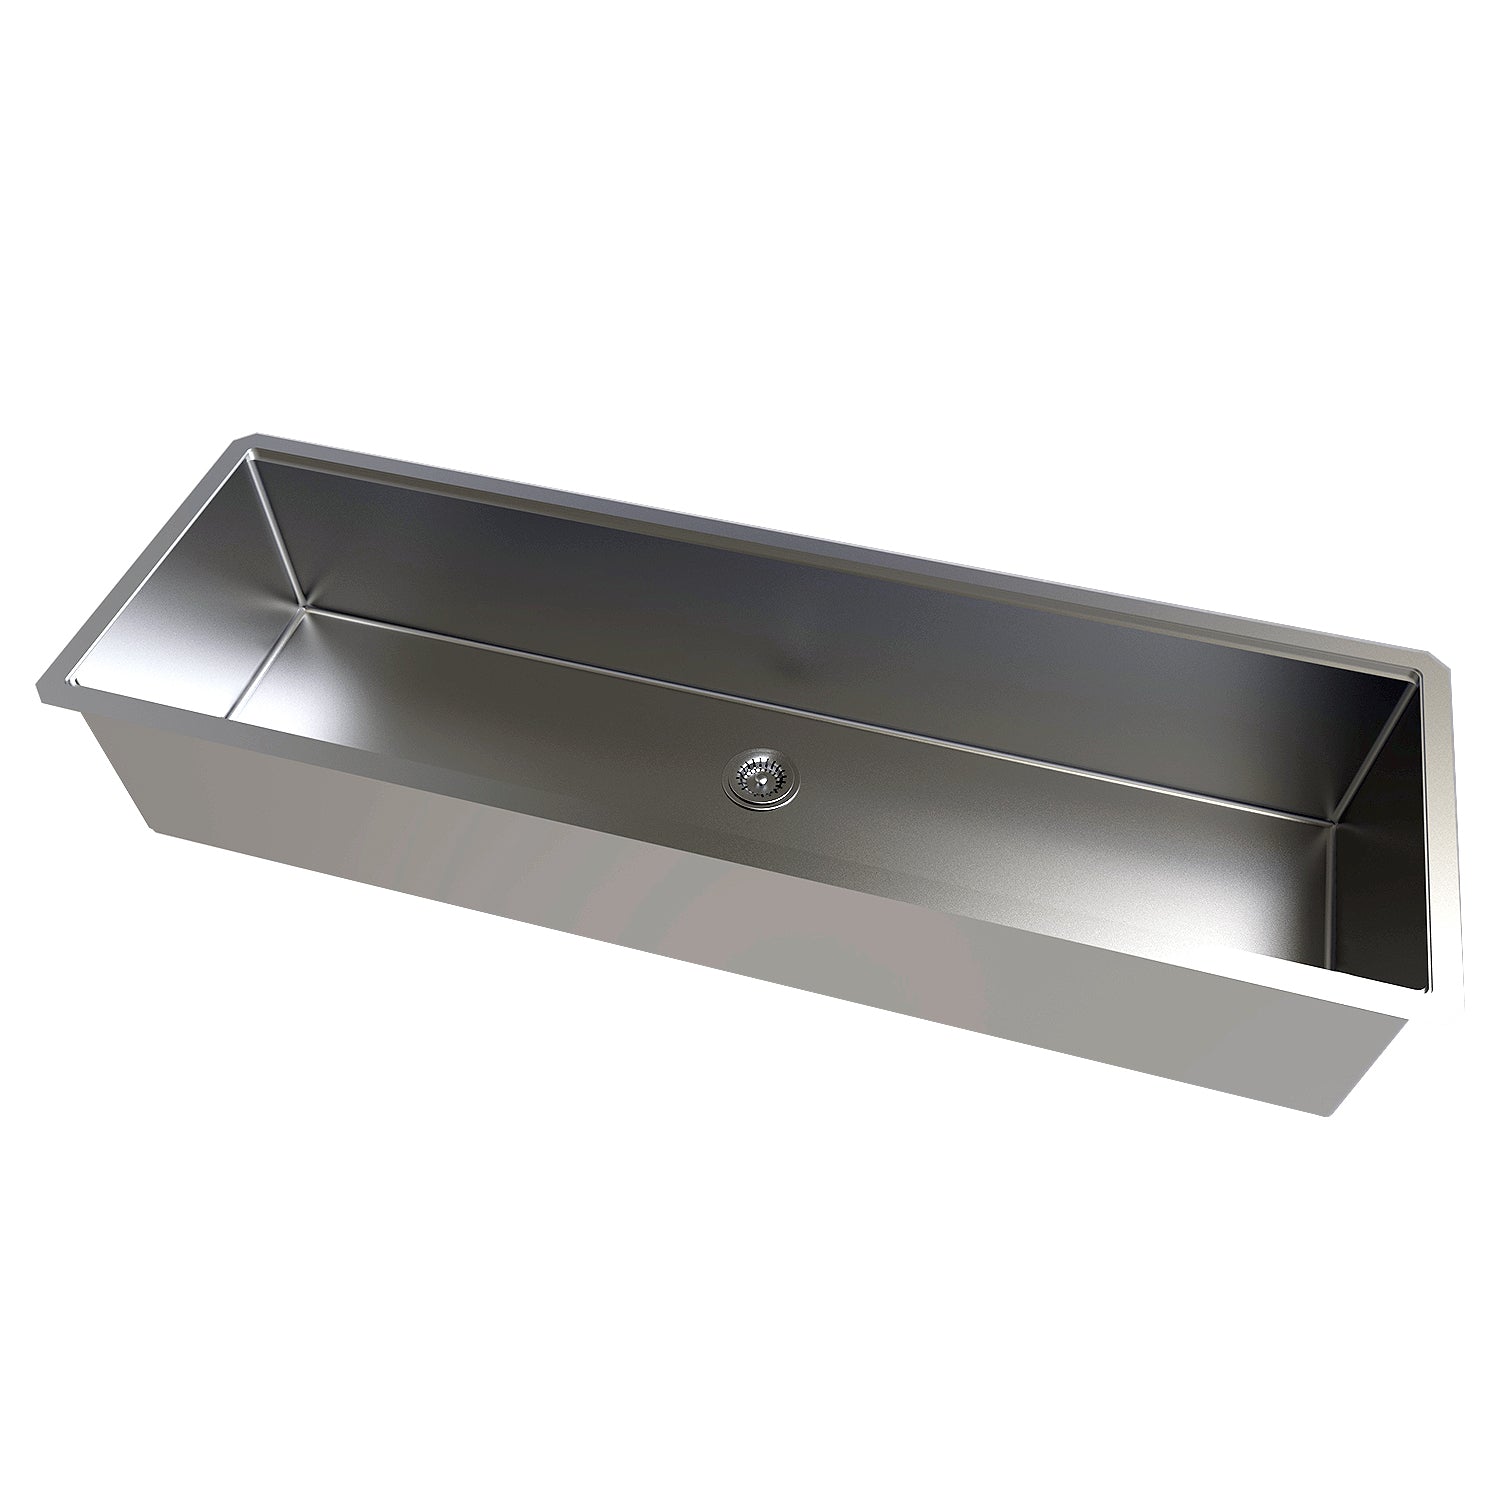 DAX Workstation Single Bowl Undermount Kitchen Sink 59" x 18" - R10 - 18G, Accessories Included (DX-WS5919-R10).